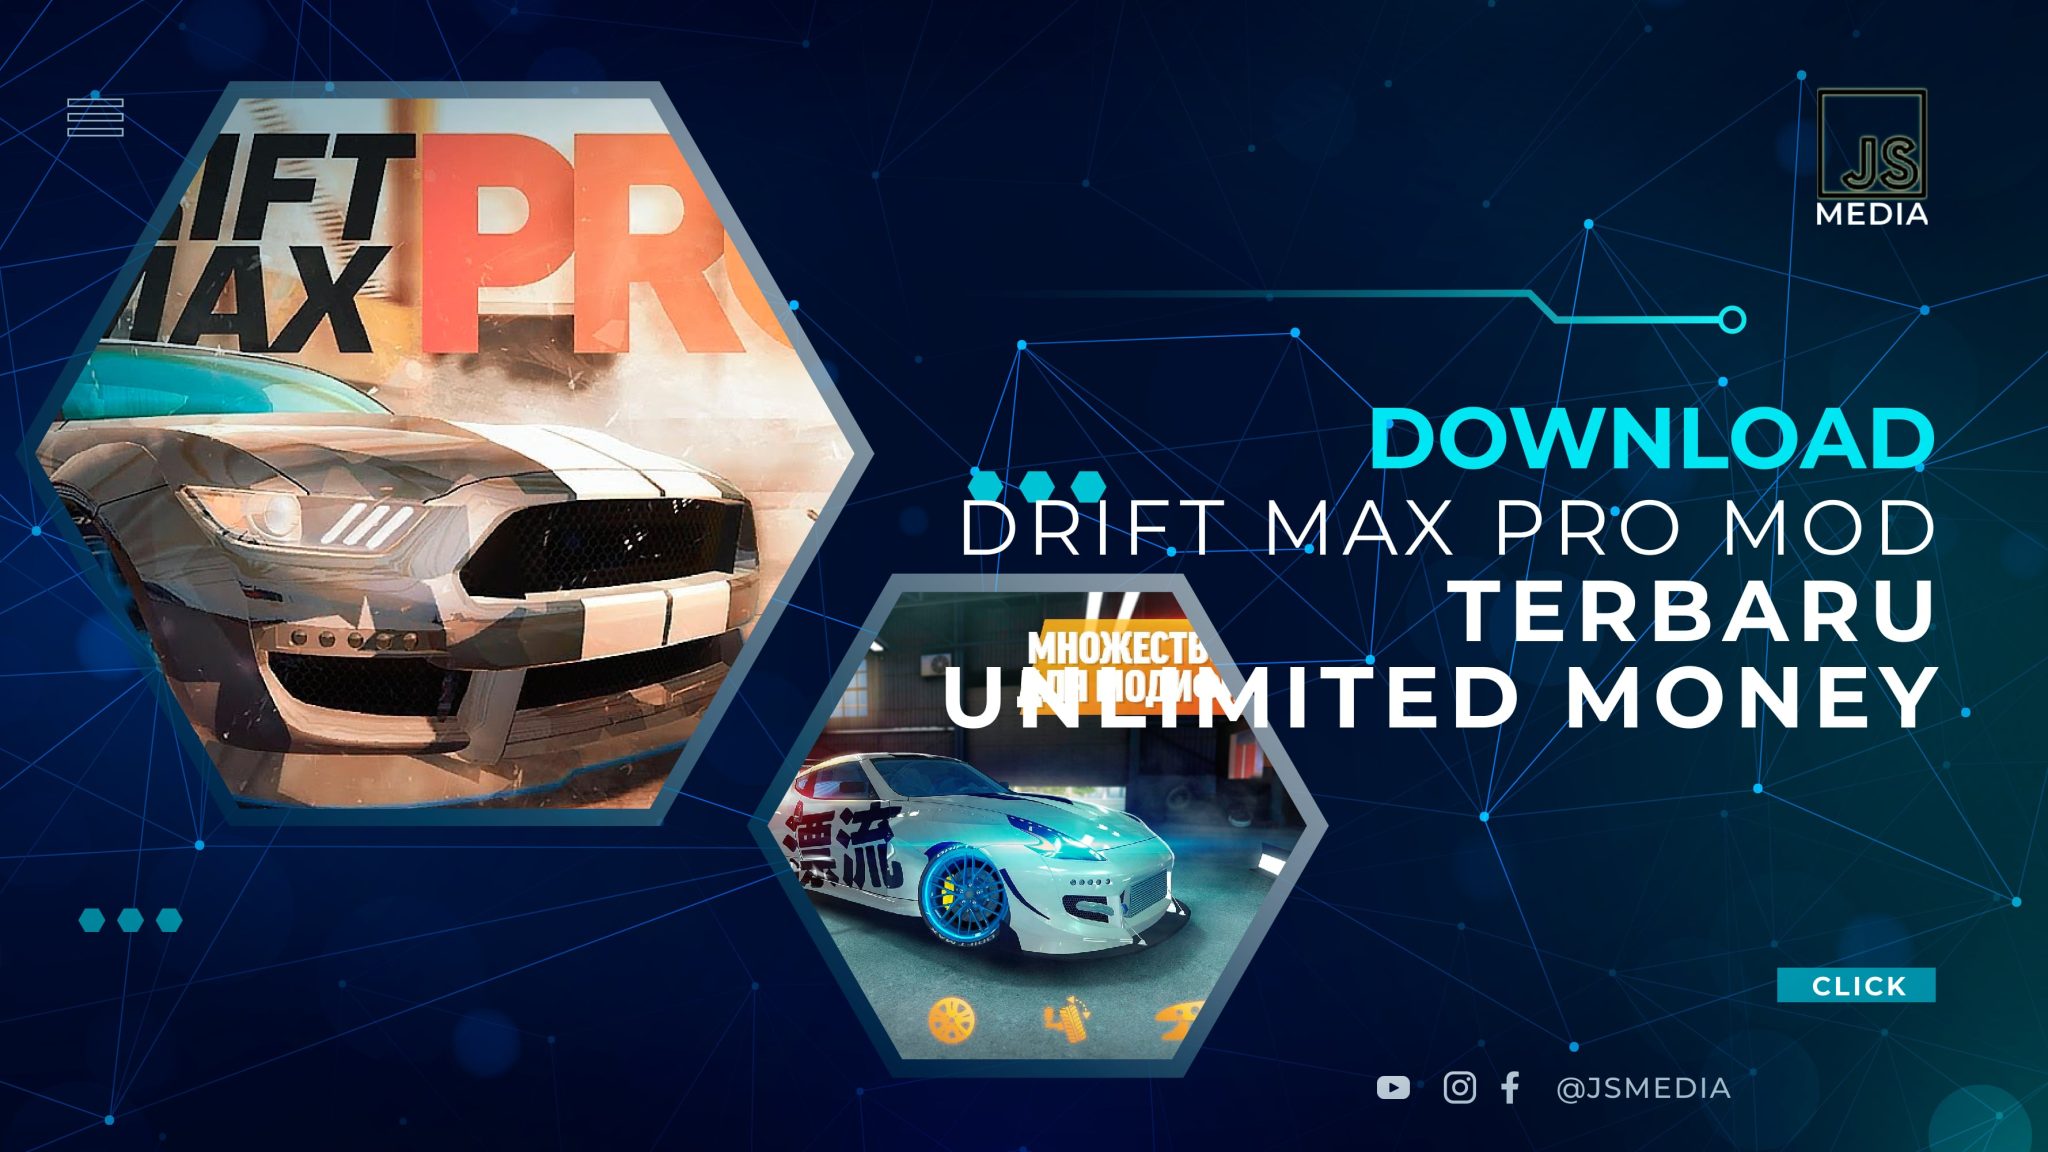 Drift Max Pro Mod. Drift Max Pro. Drift Max Pro мод. Mod APK ofdirific Max Pro m2.